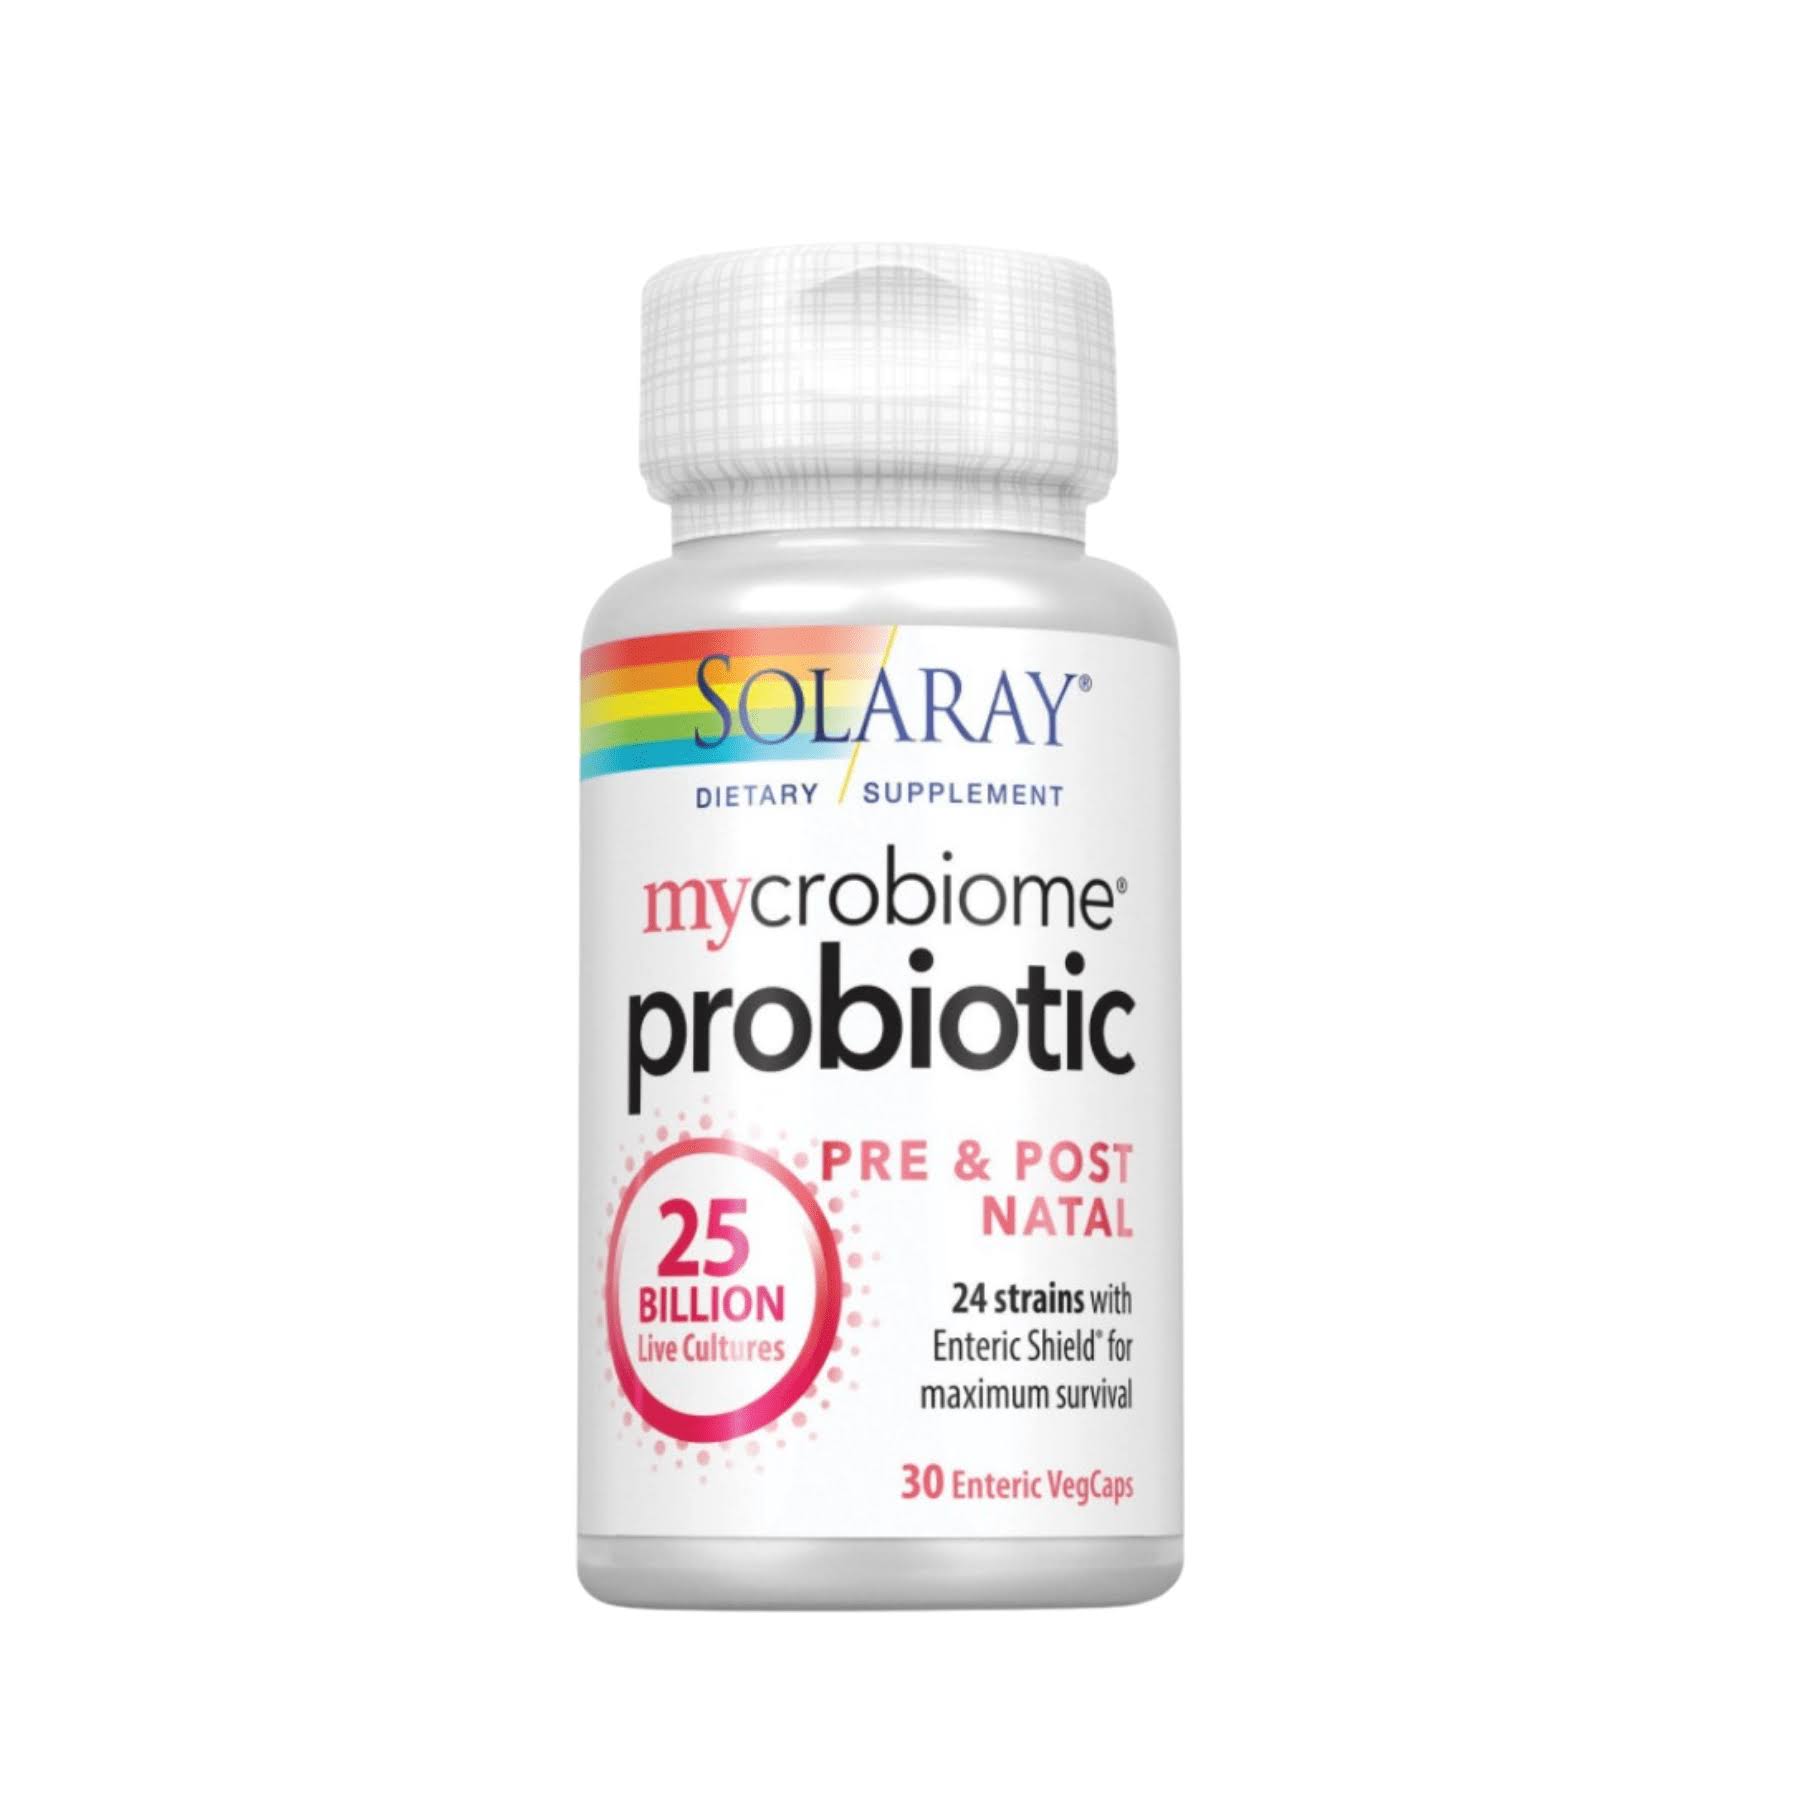 Solaray Mycrobiome Probiotic Pre and Post Natal - 30 Enteric VegCaps